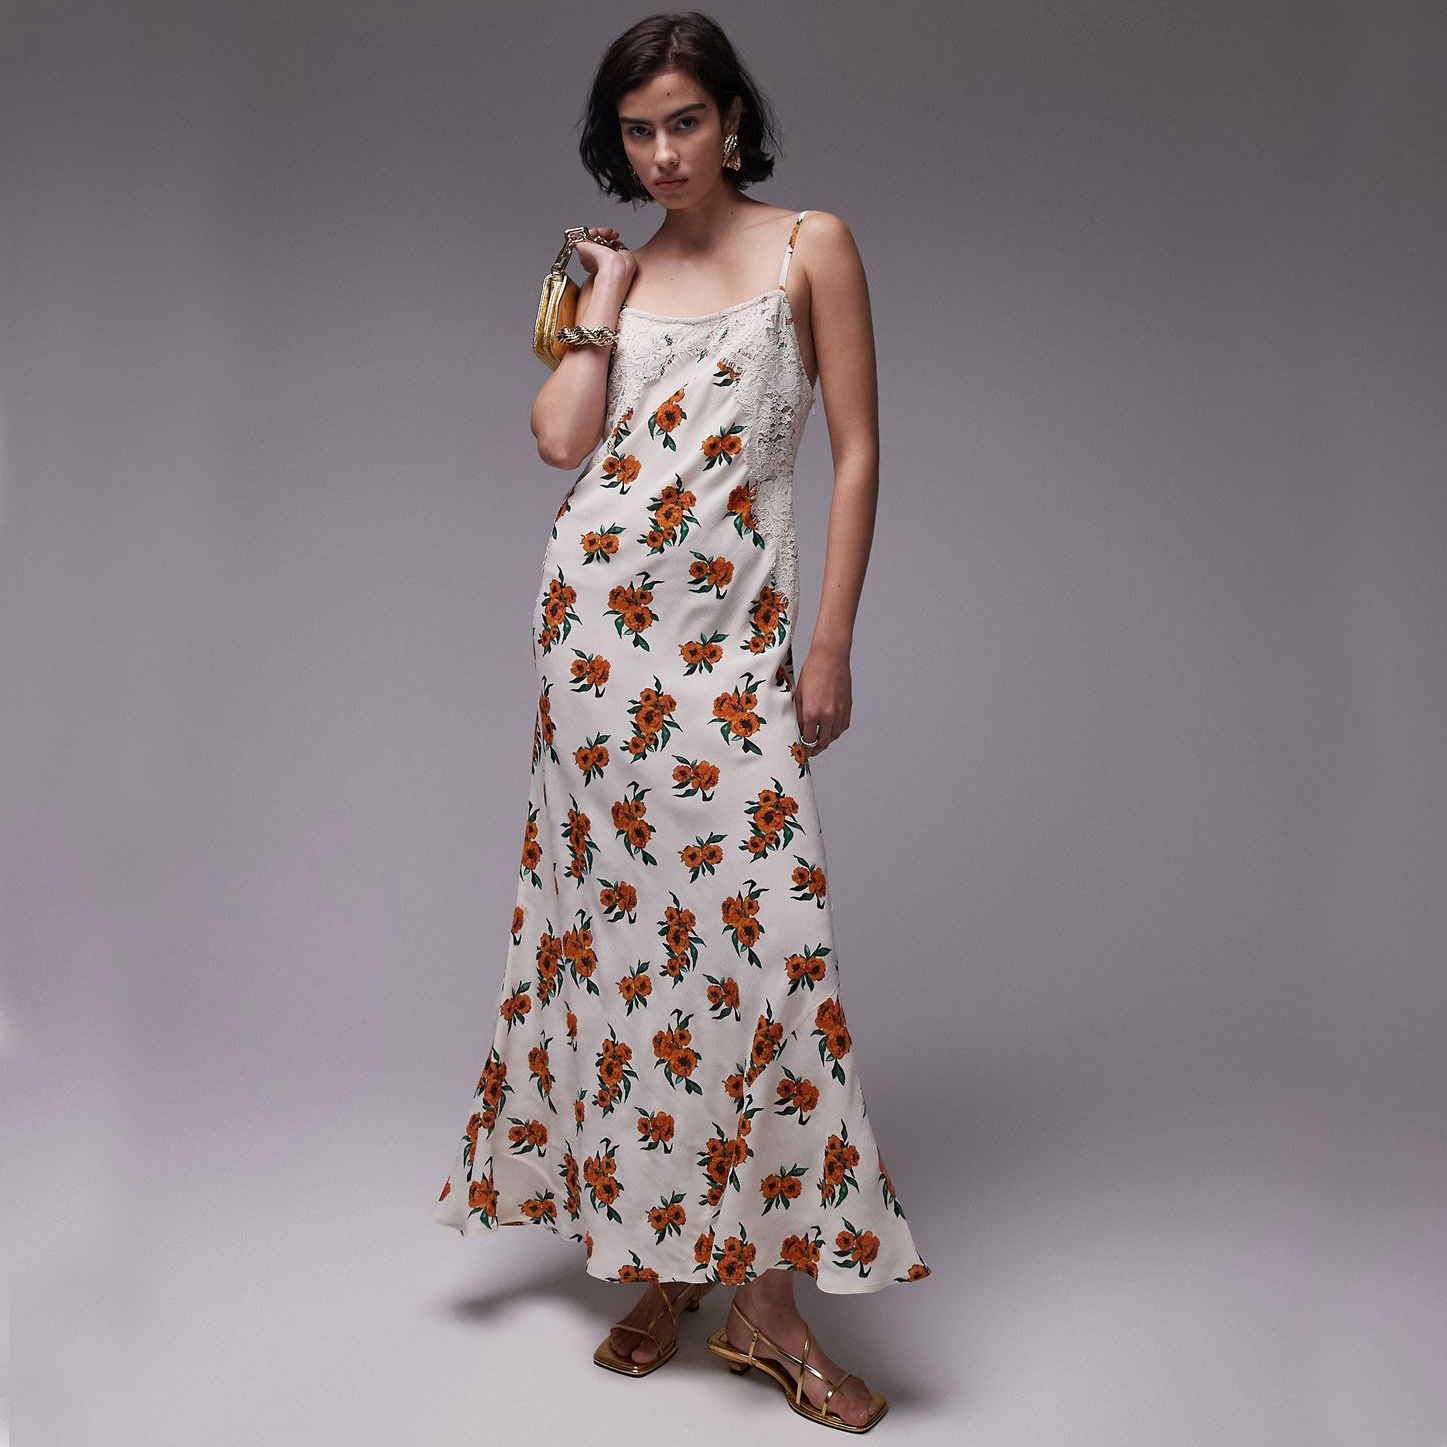 Платье Topshop Strapless Premium Maxi With Lace Floral Pattern, белый/оранжевый платье topshop airy strapless mini with ruffled waistband черный